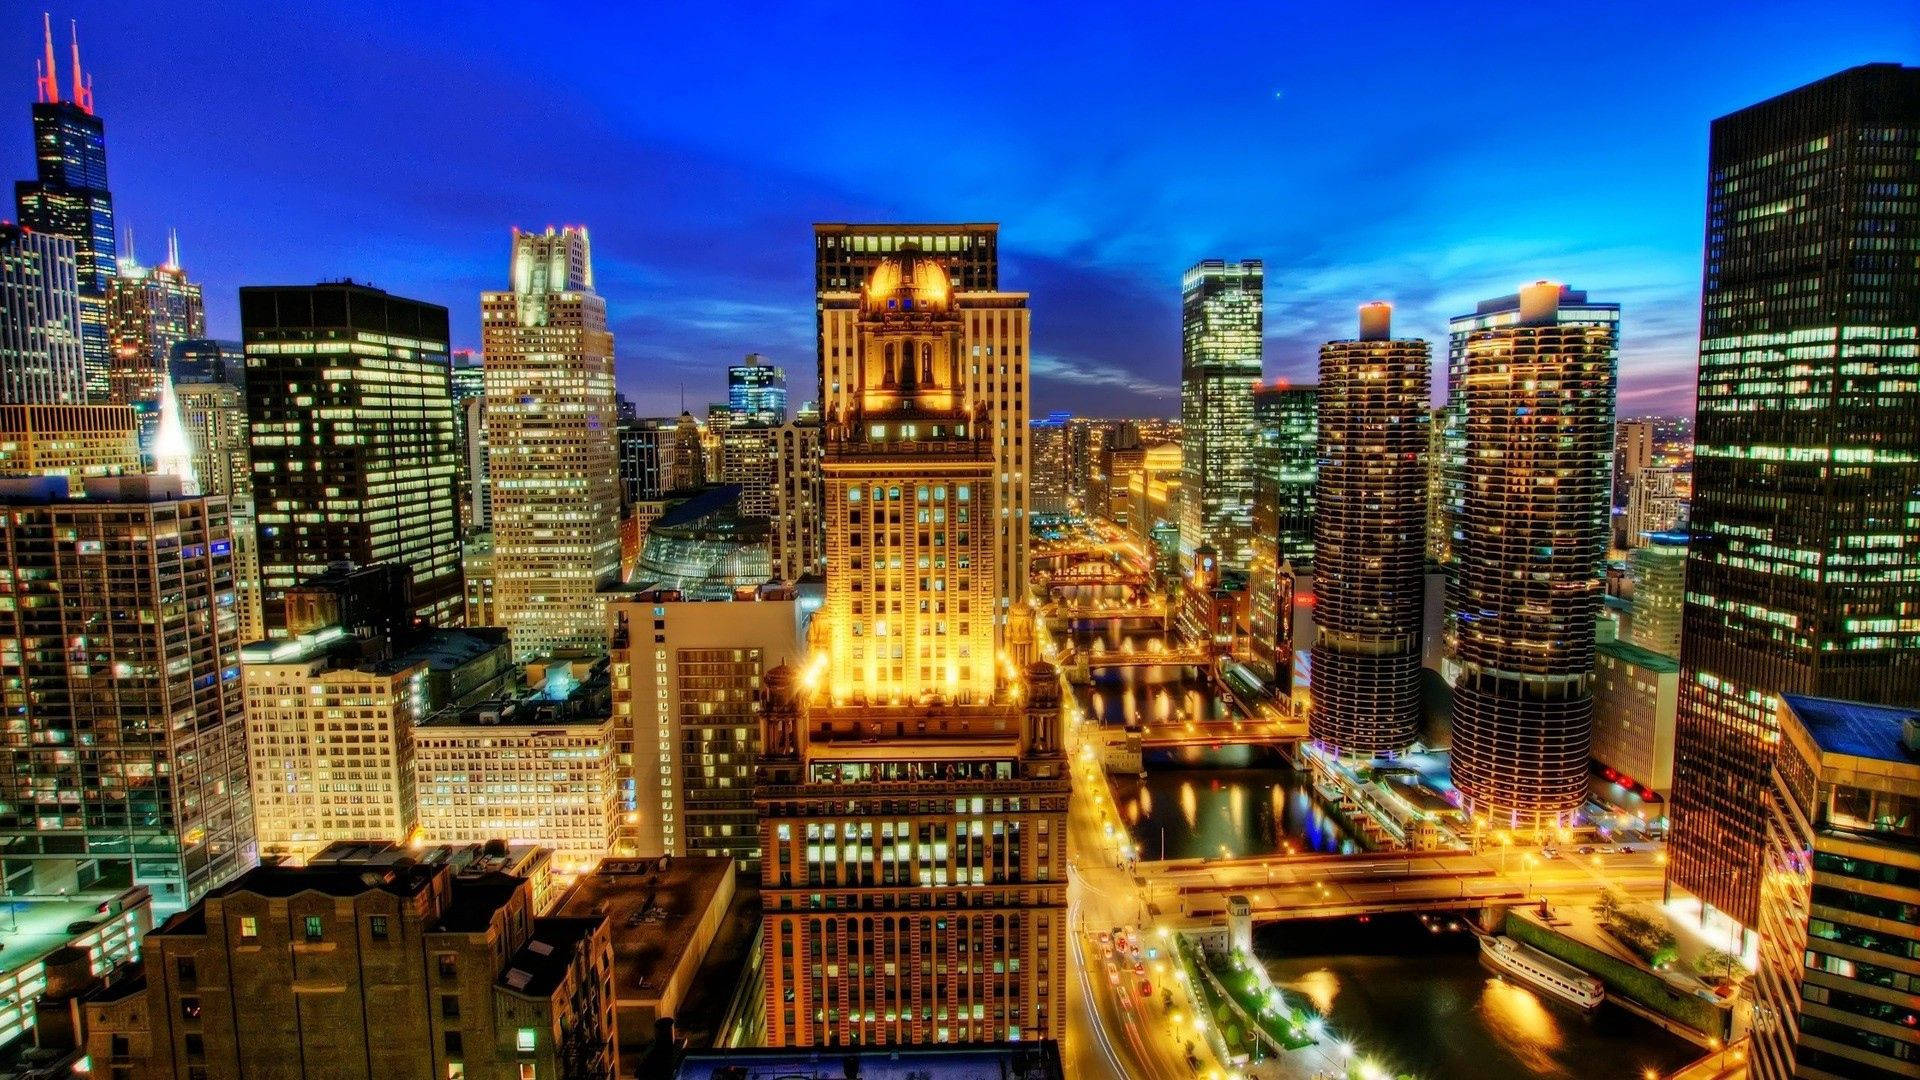 Amazing City Lights Of Chicago